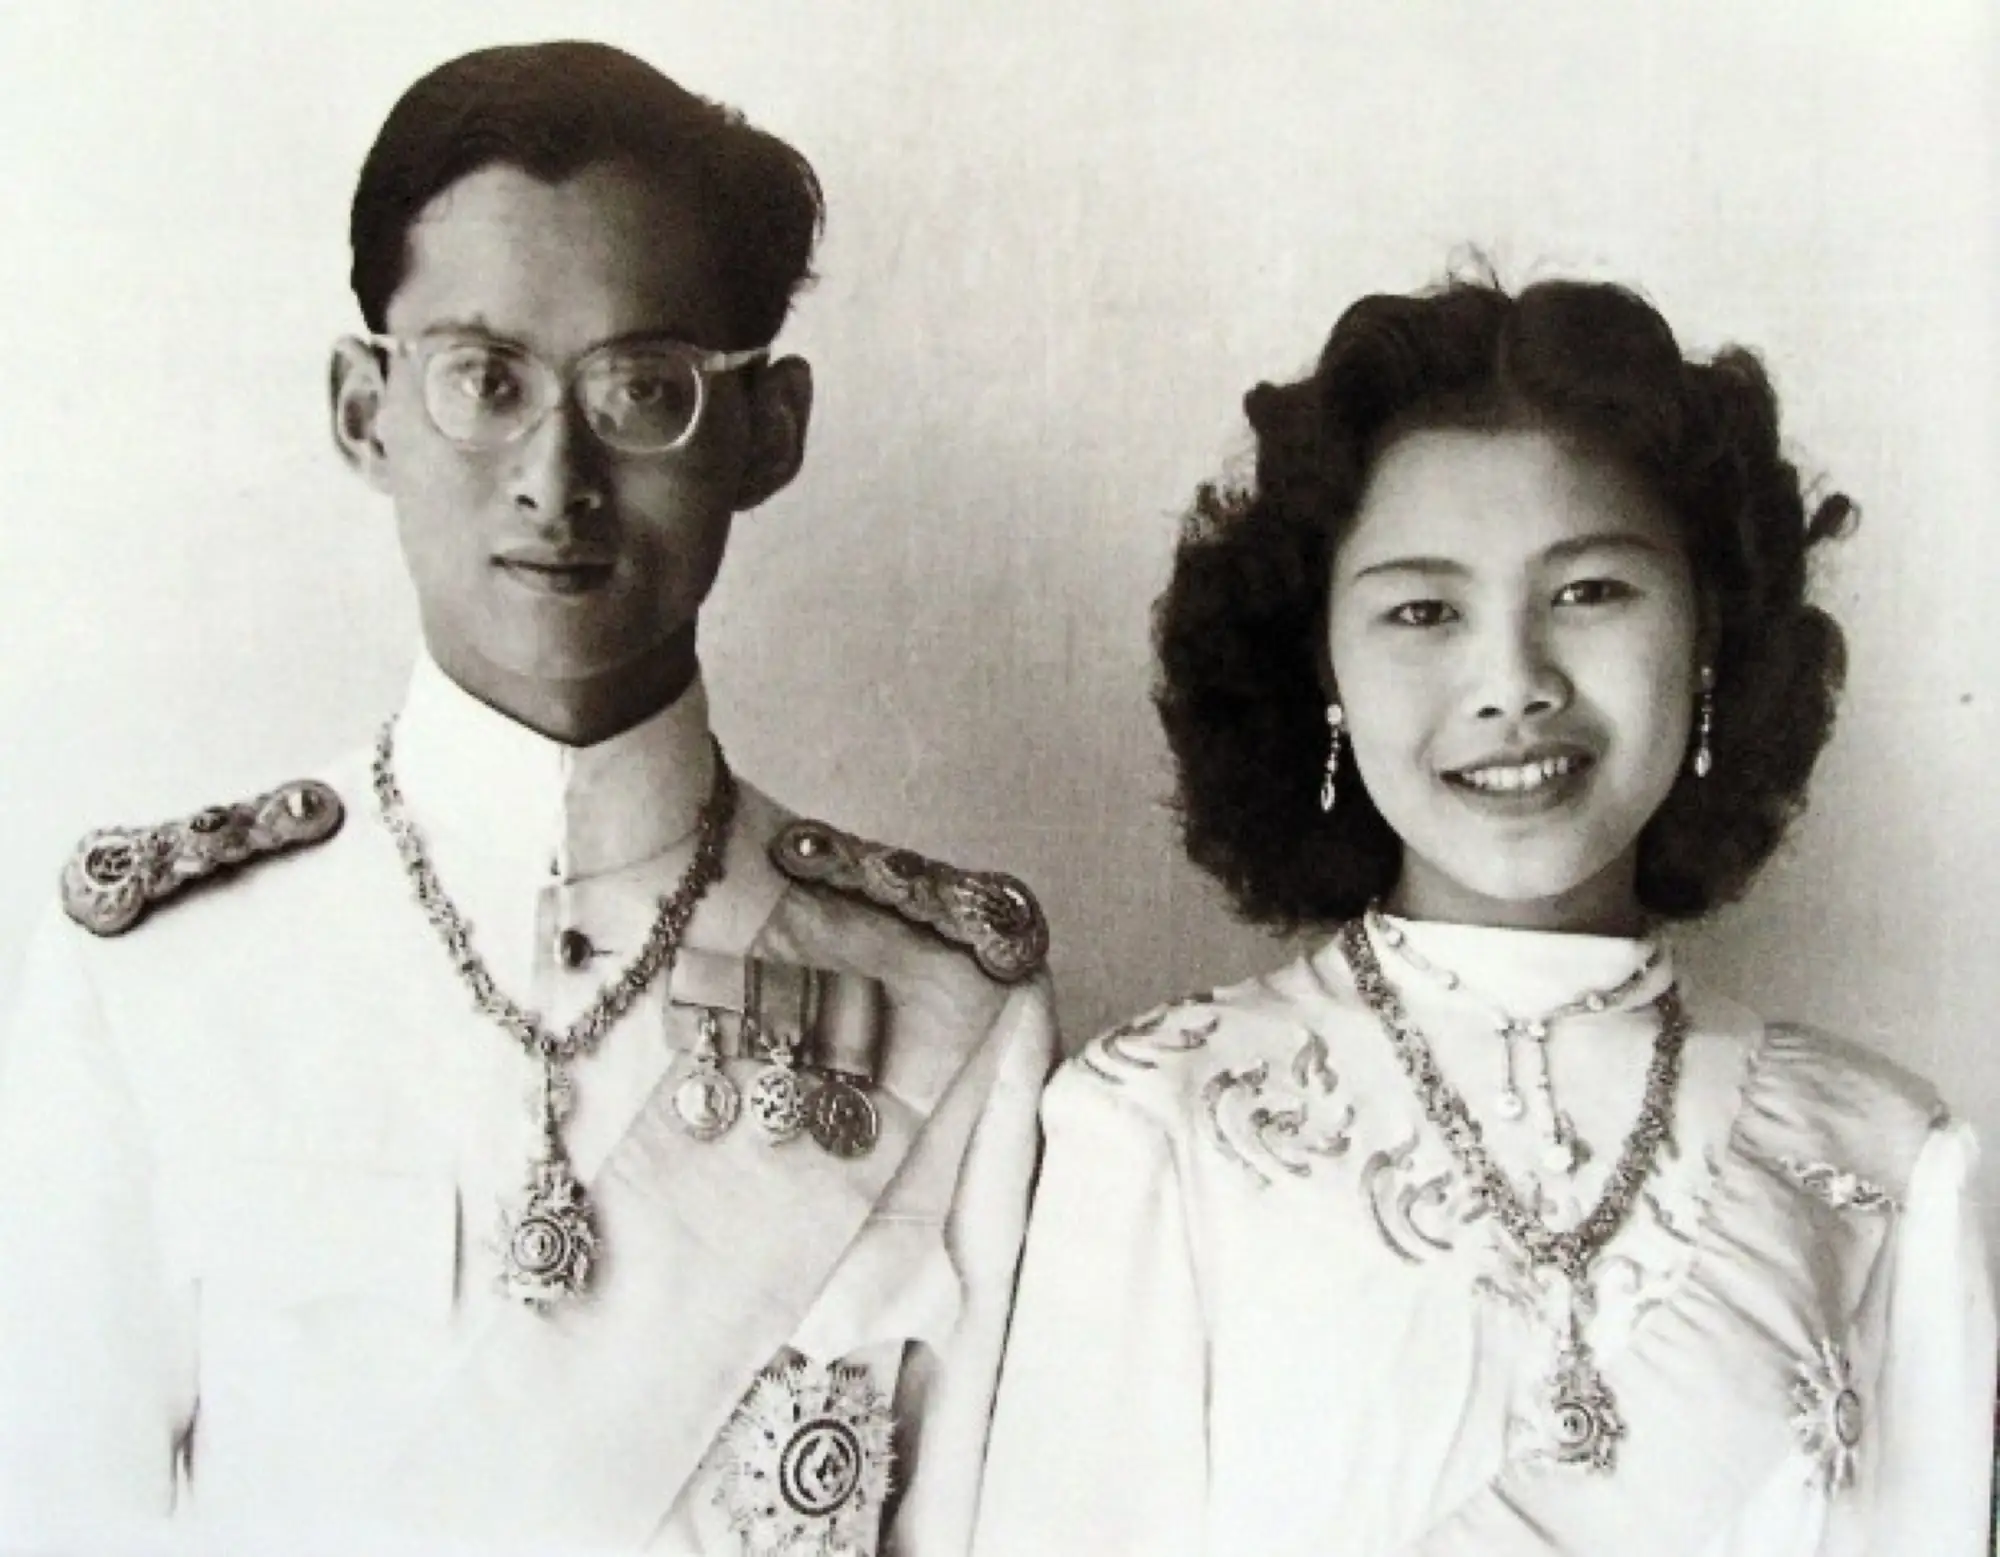 life-event-1927-2016-king-bhumibol-adulyadej